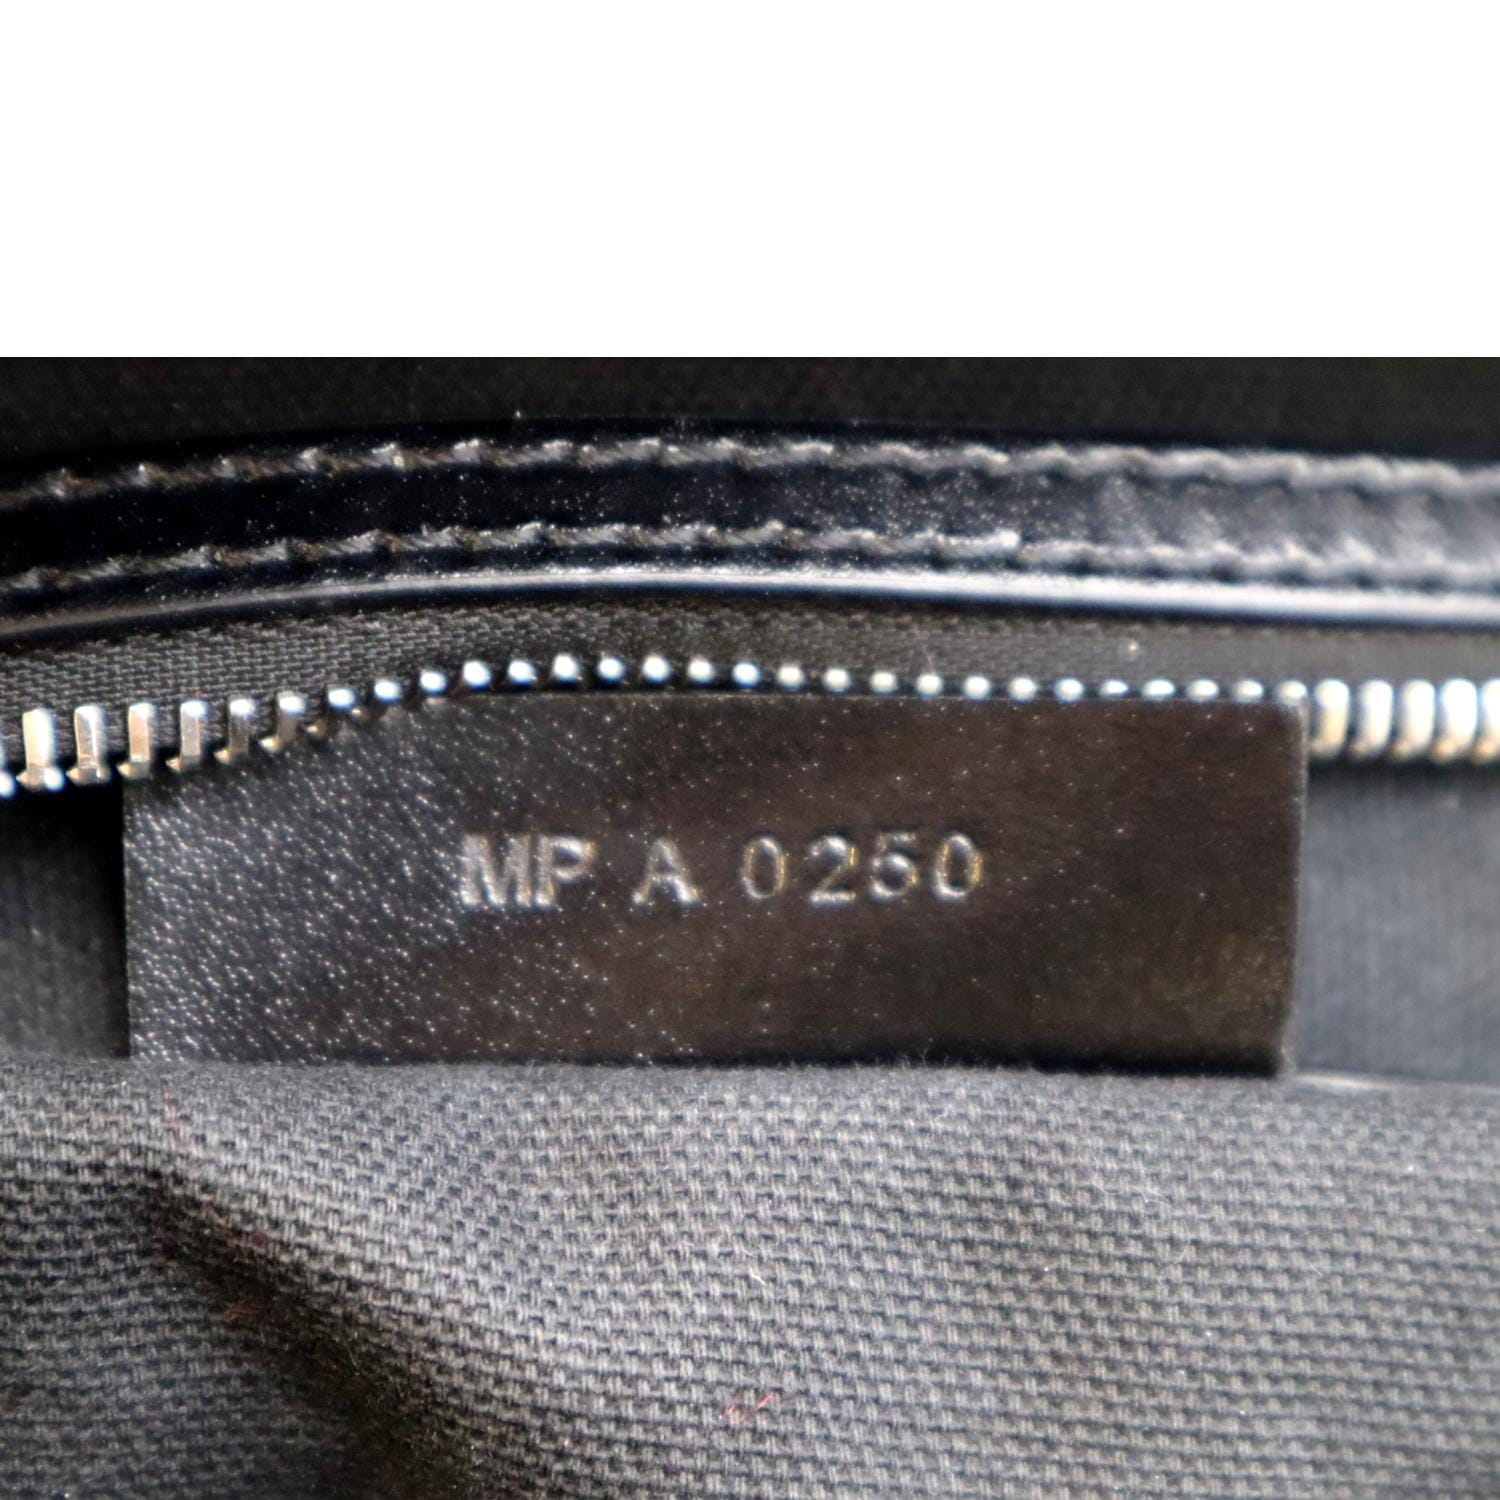 Givenchy Antigona Bag Leather Medium Black 2088301